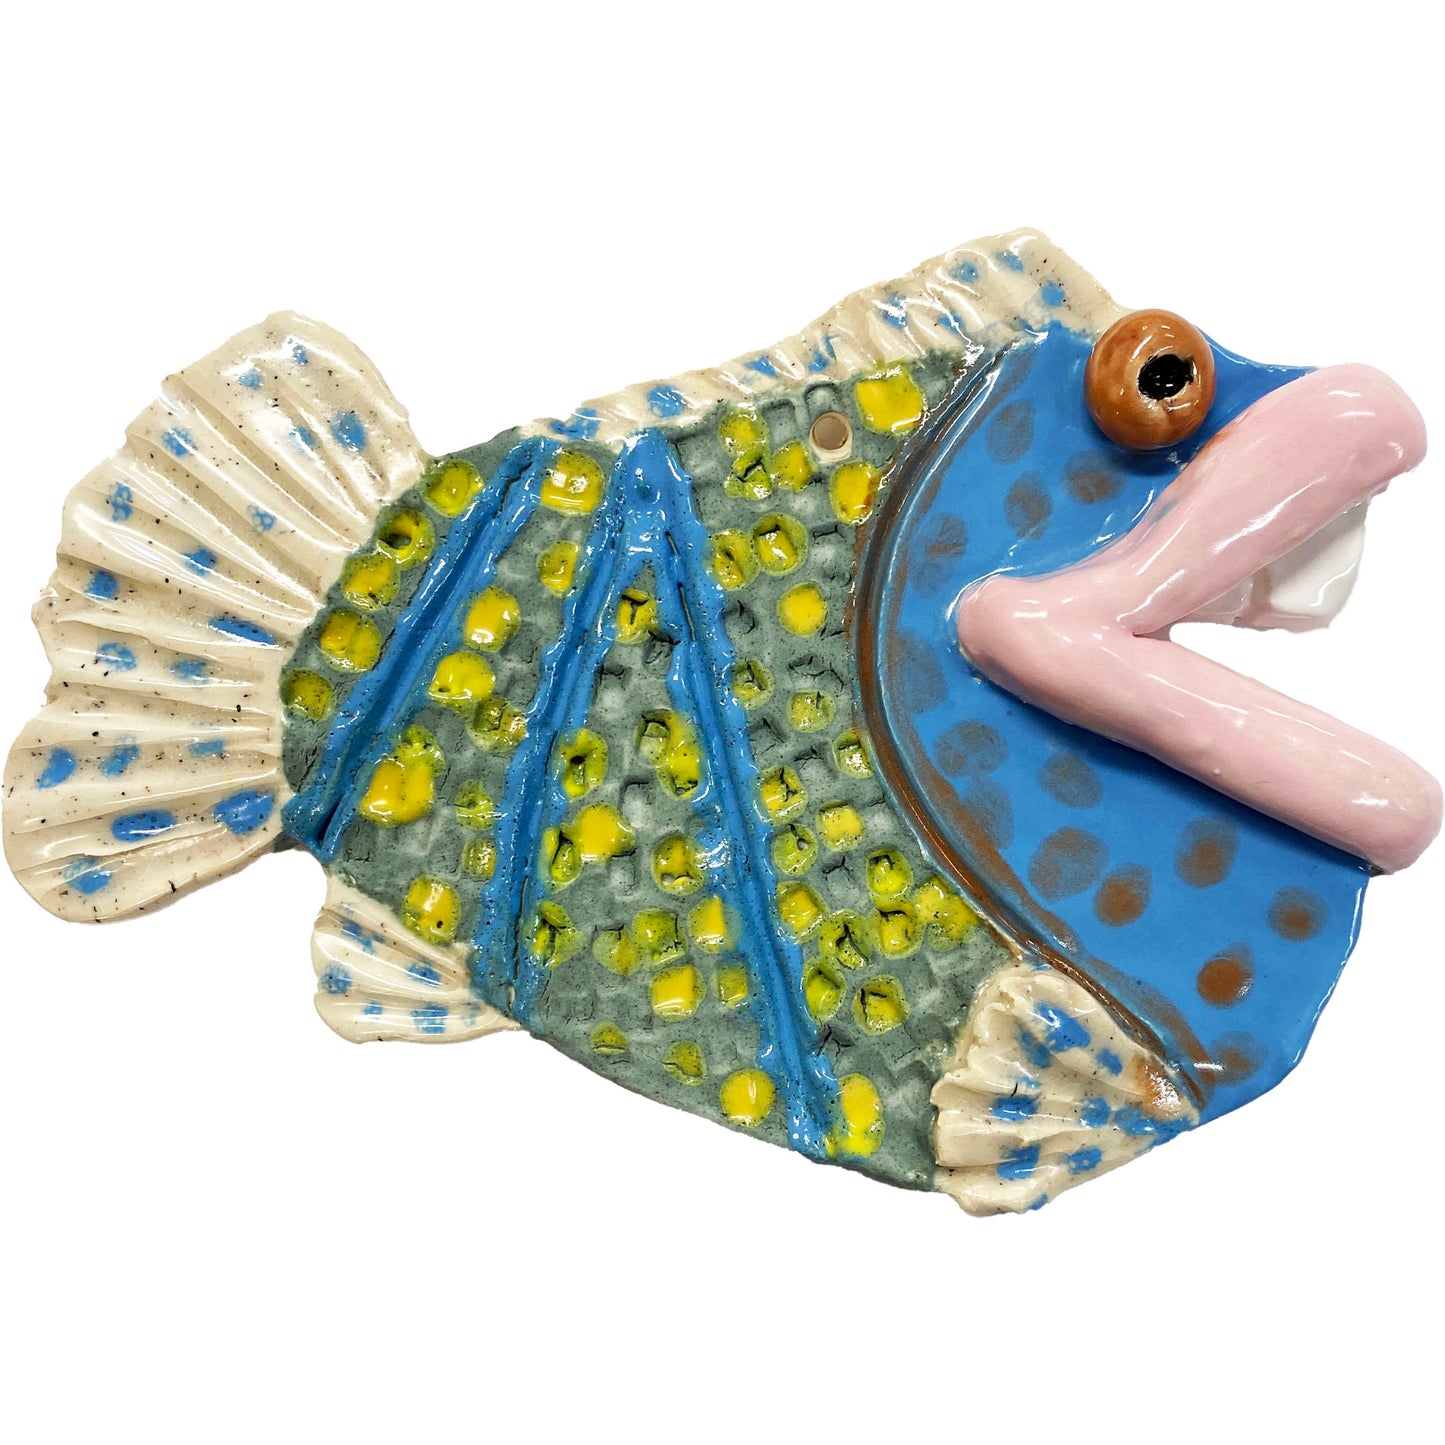 Ceramic Arts Handmade Clay Crafts Fresh Fish Glazed 6.5-inch x 4-inch by Ben Levine